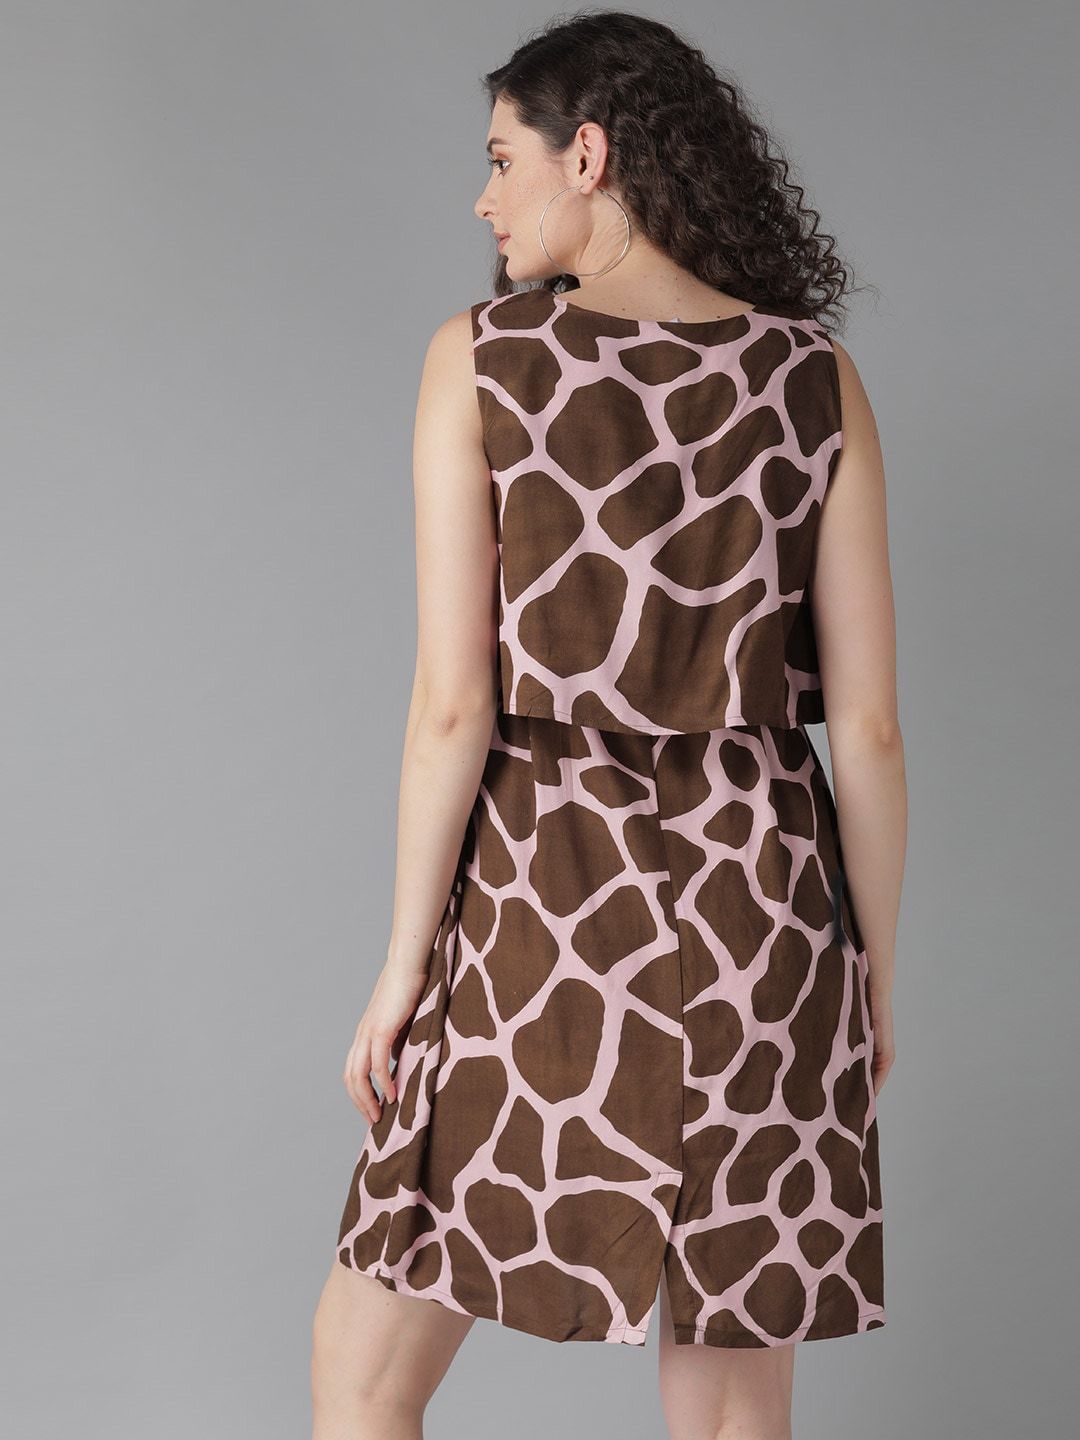 Women's  Pink & Brown Animal Printed A-Line Dress - AKS